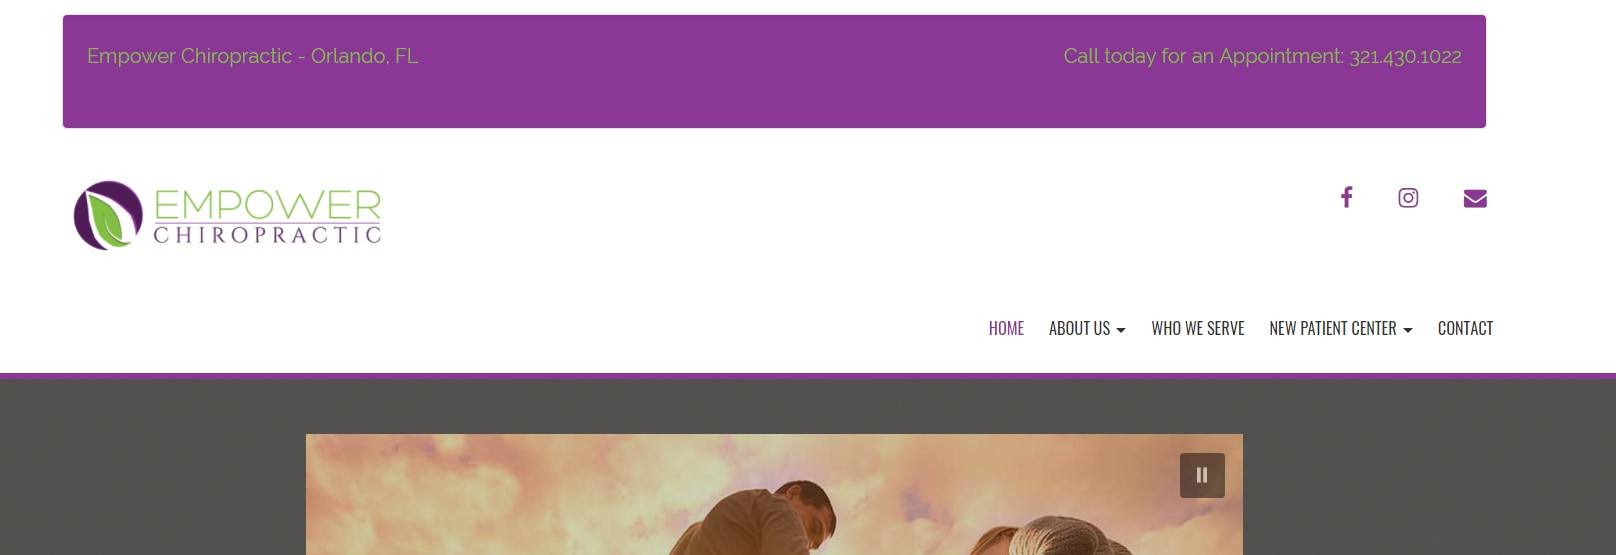 website screenshot with top bar of text